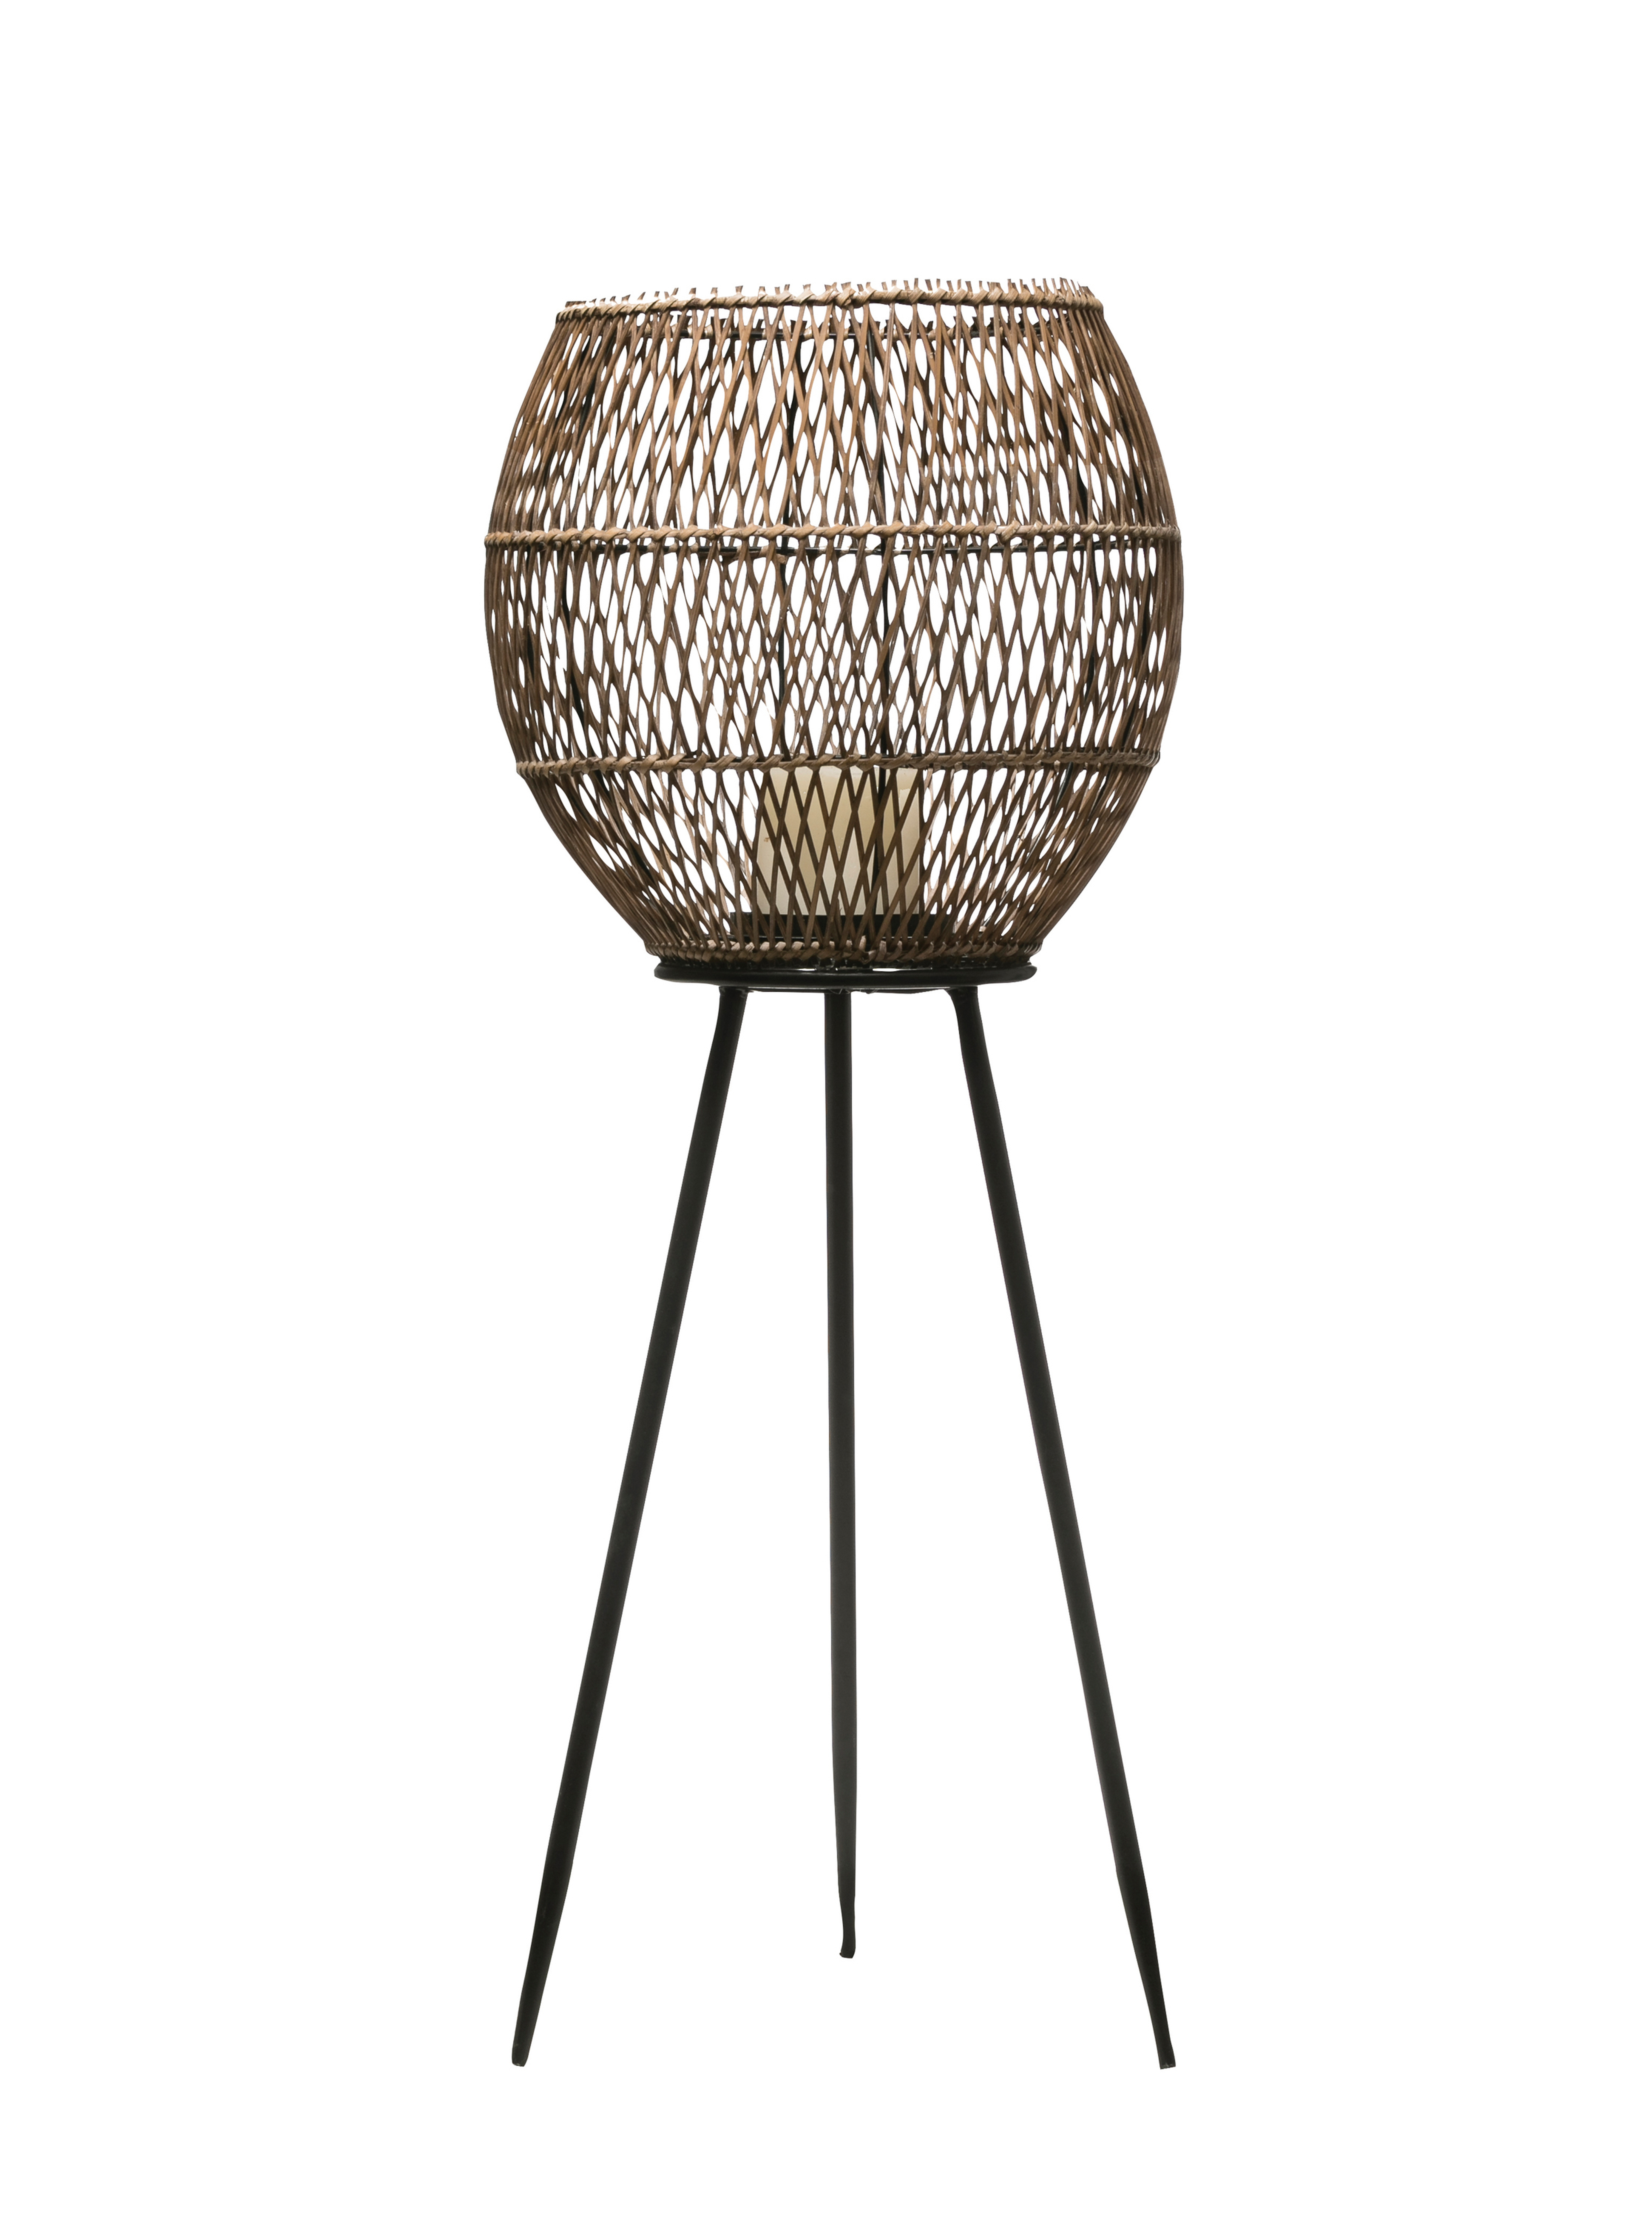 32.25"H Handwoven Bamboo & Rattan Lantern with Glass Insert & Tripod Metal Legs - Moss & Wilder